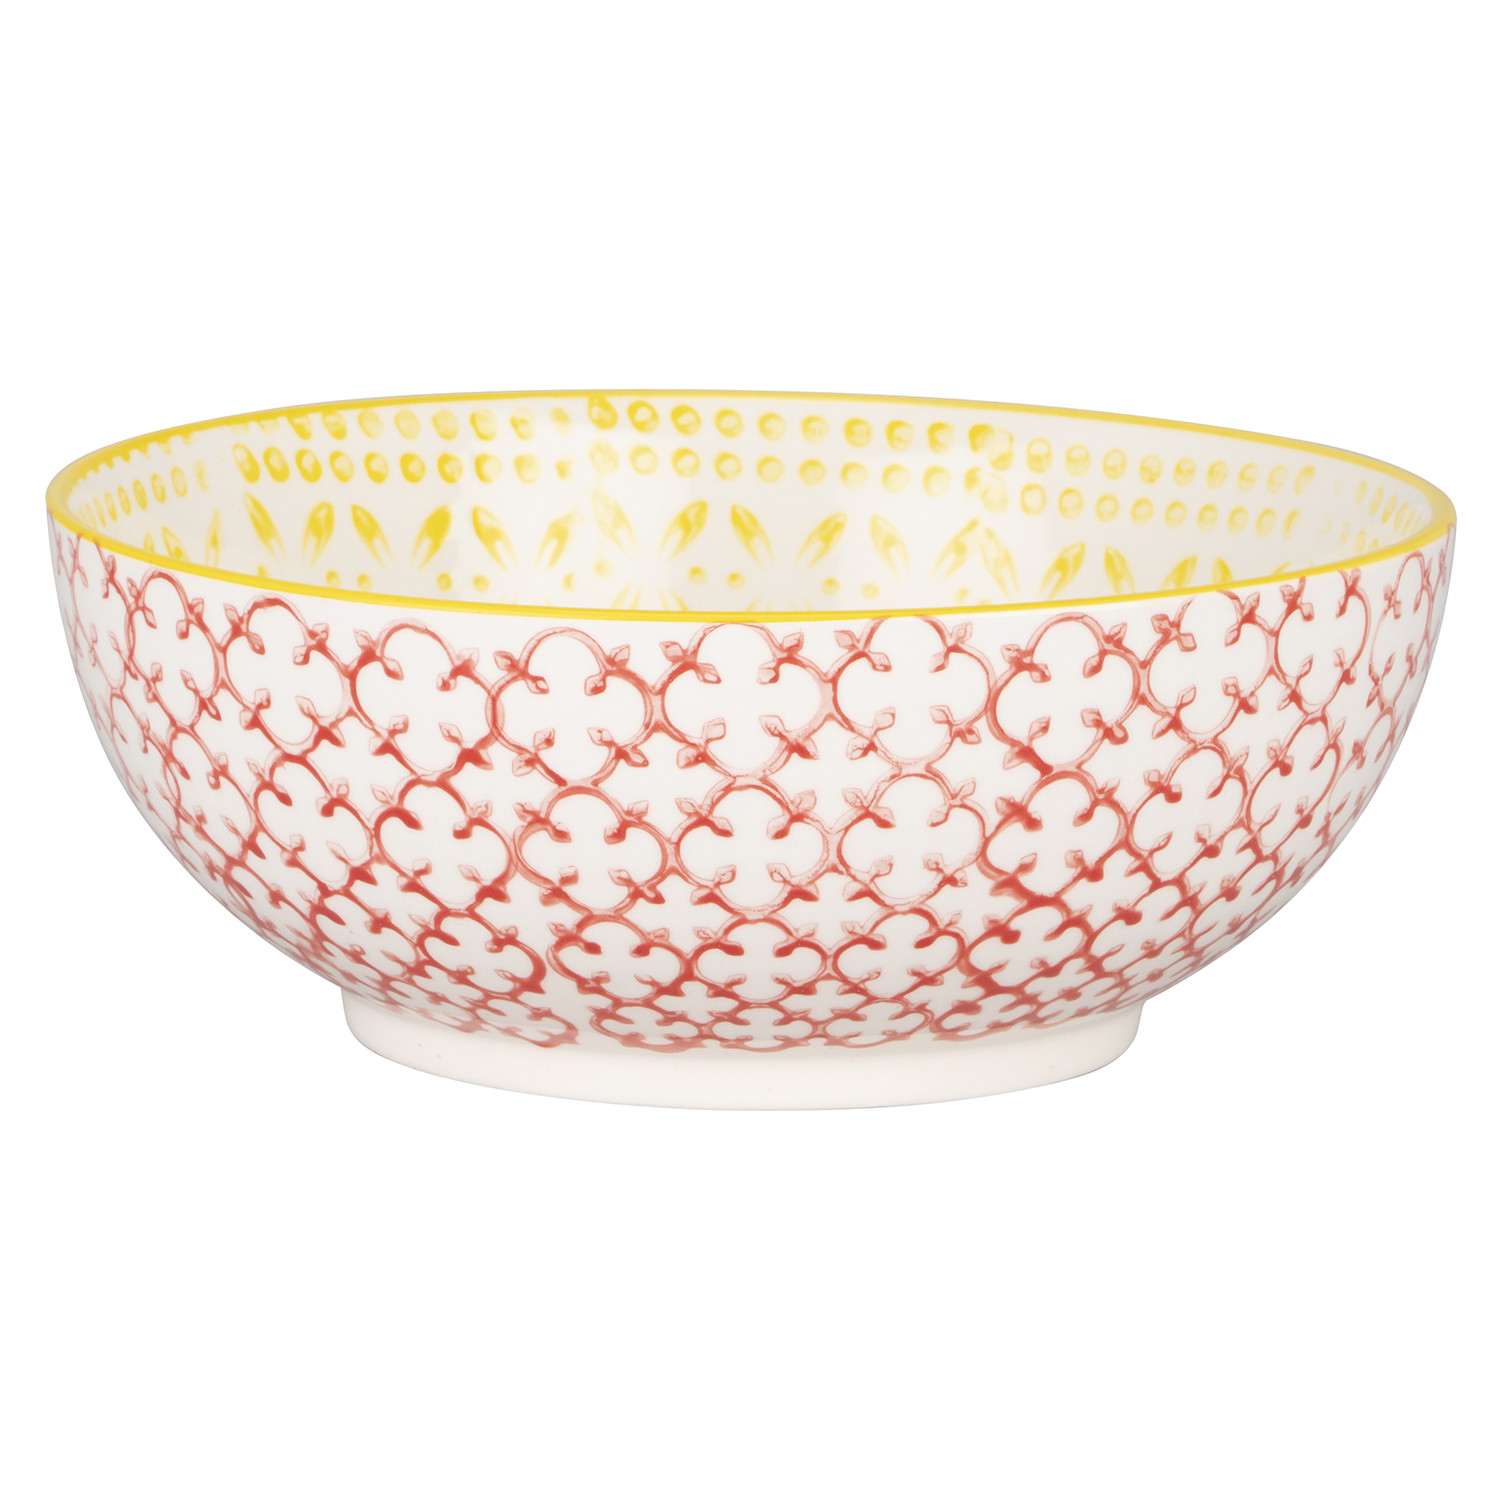 Amari Red and Yellow Large Bowl Image 1